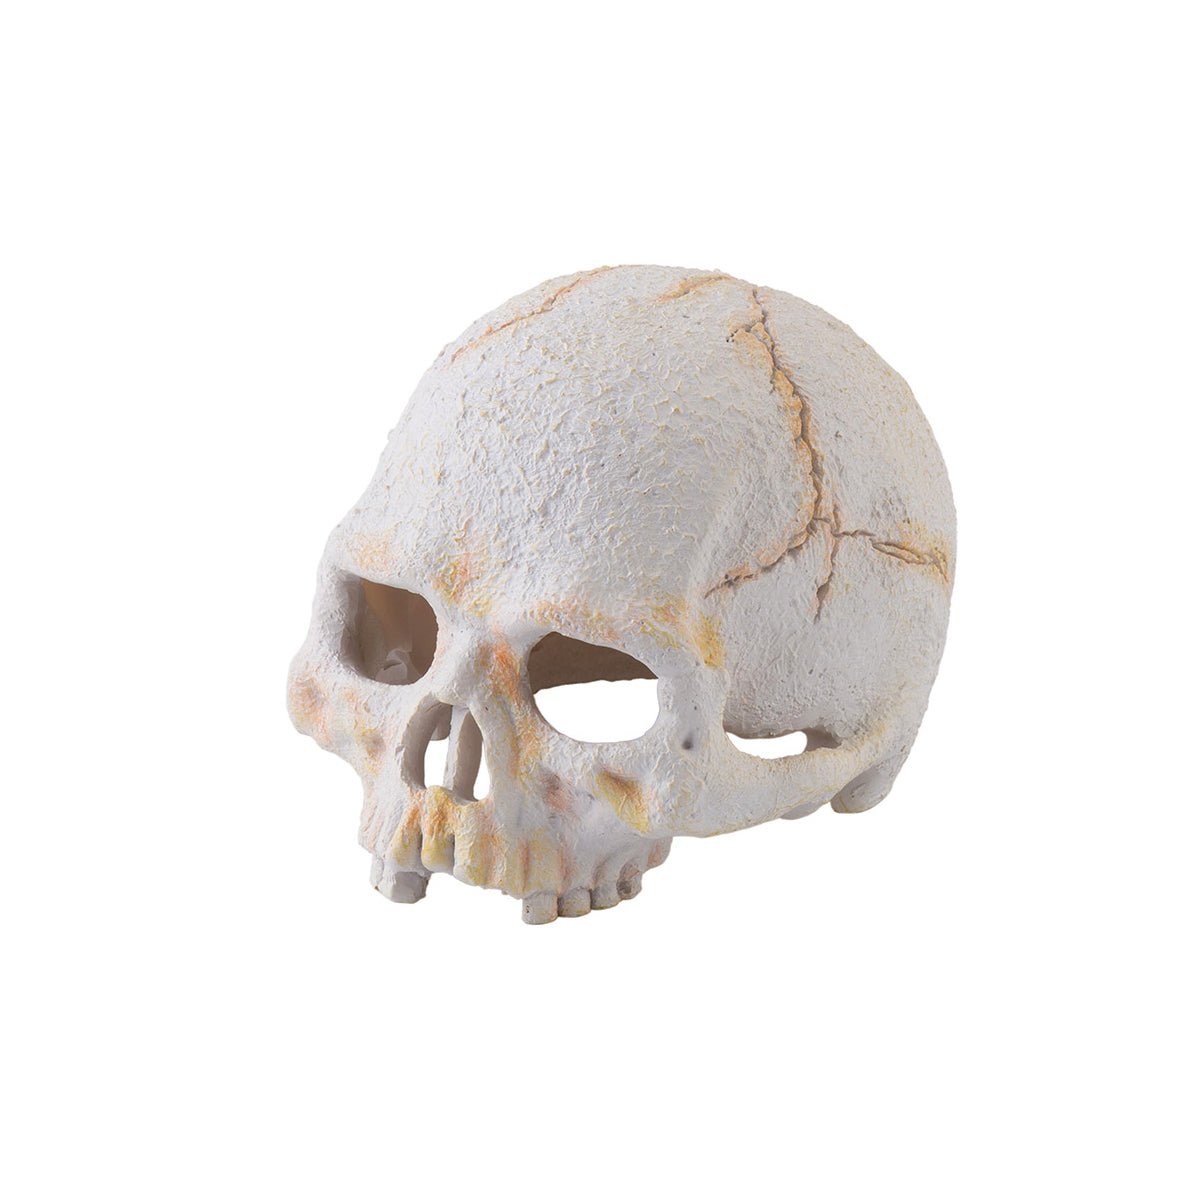 Exo Terra Primate Skull Small - Charterhouse Aquatics